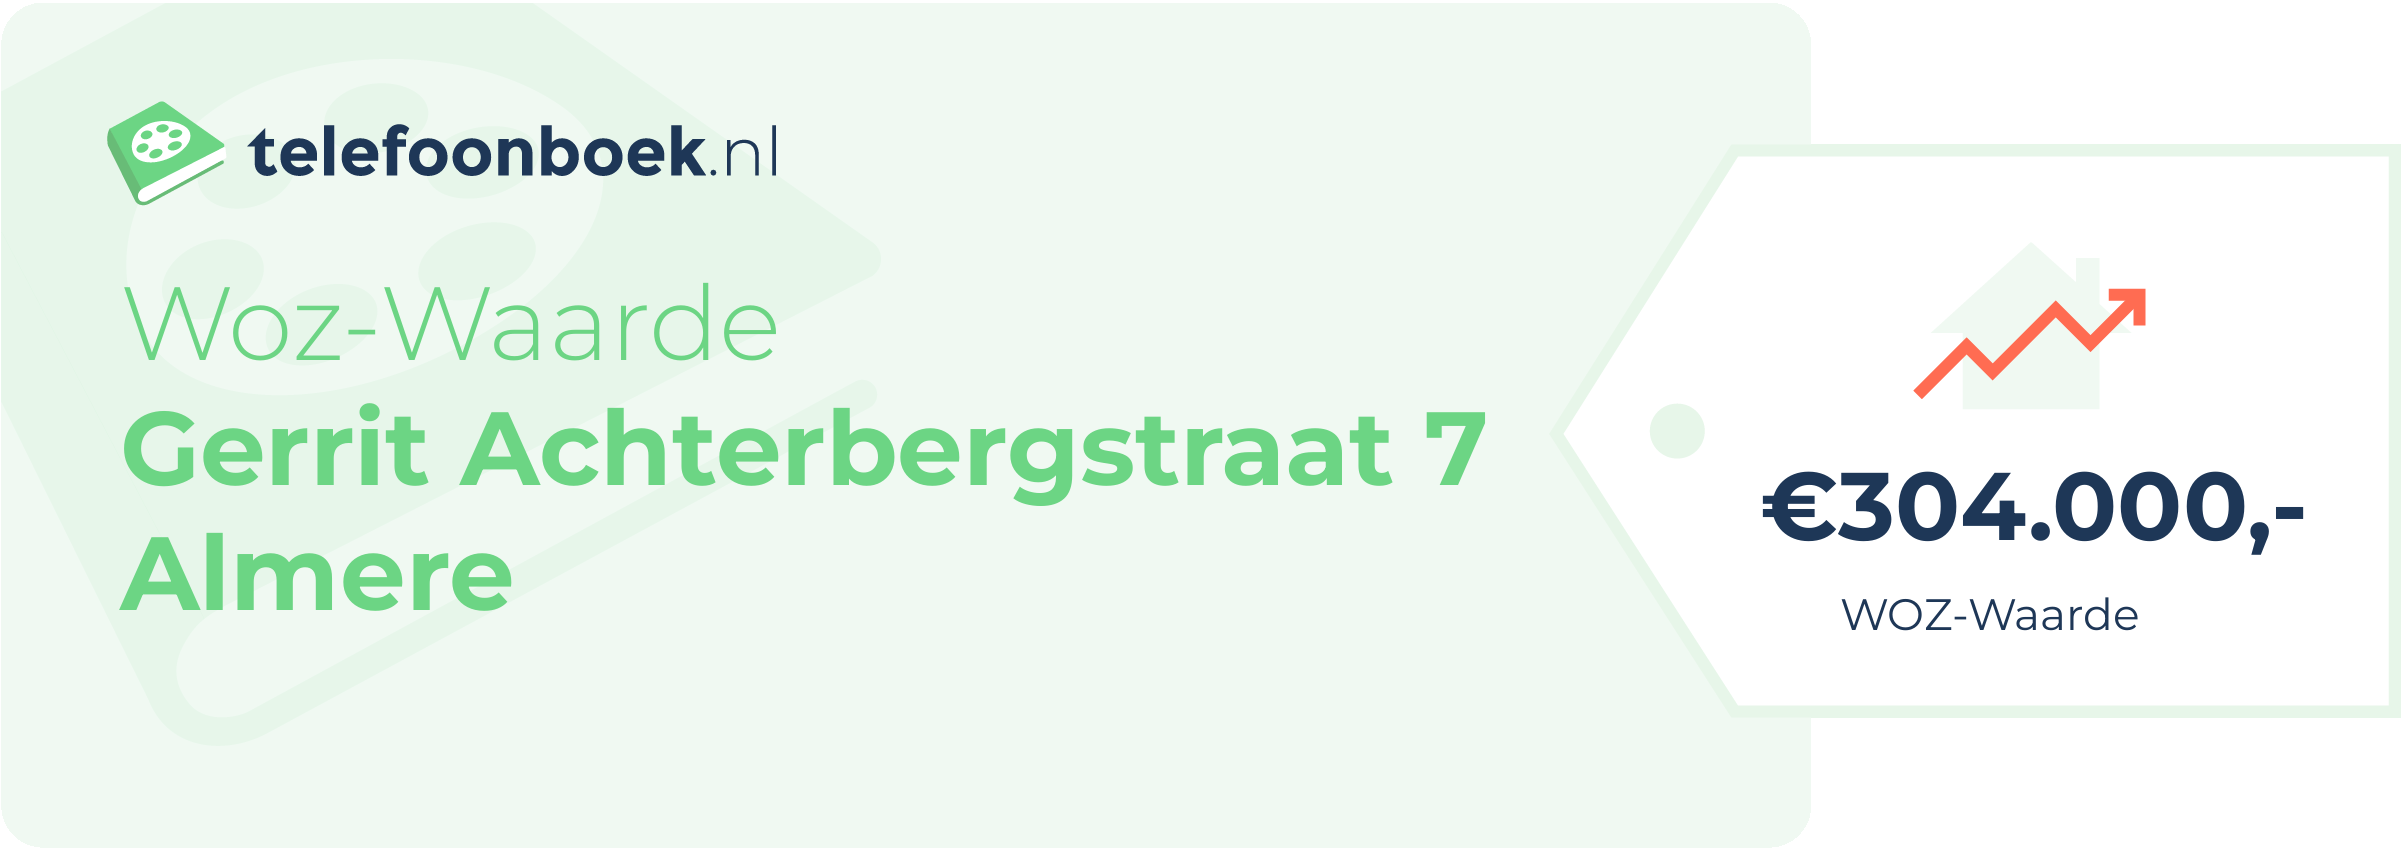 WOZ-waarde Gerrit Achterbergstraat 7 Almere